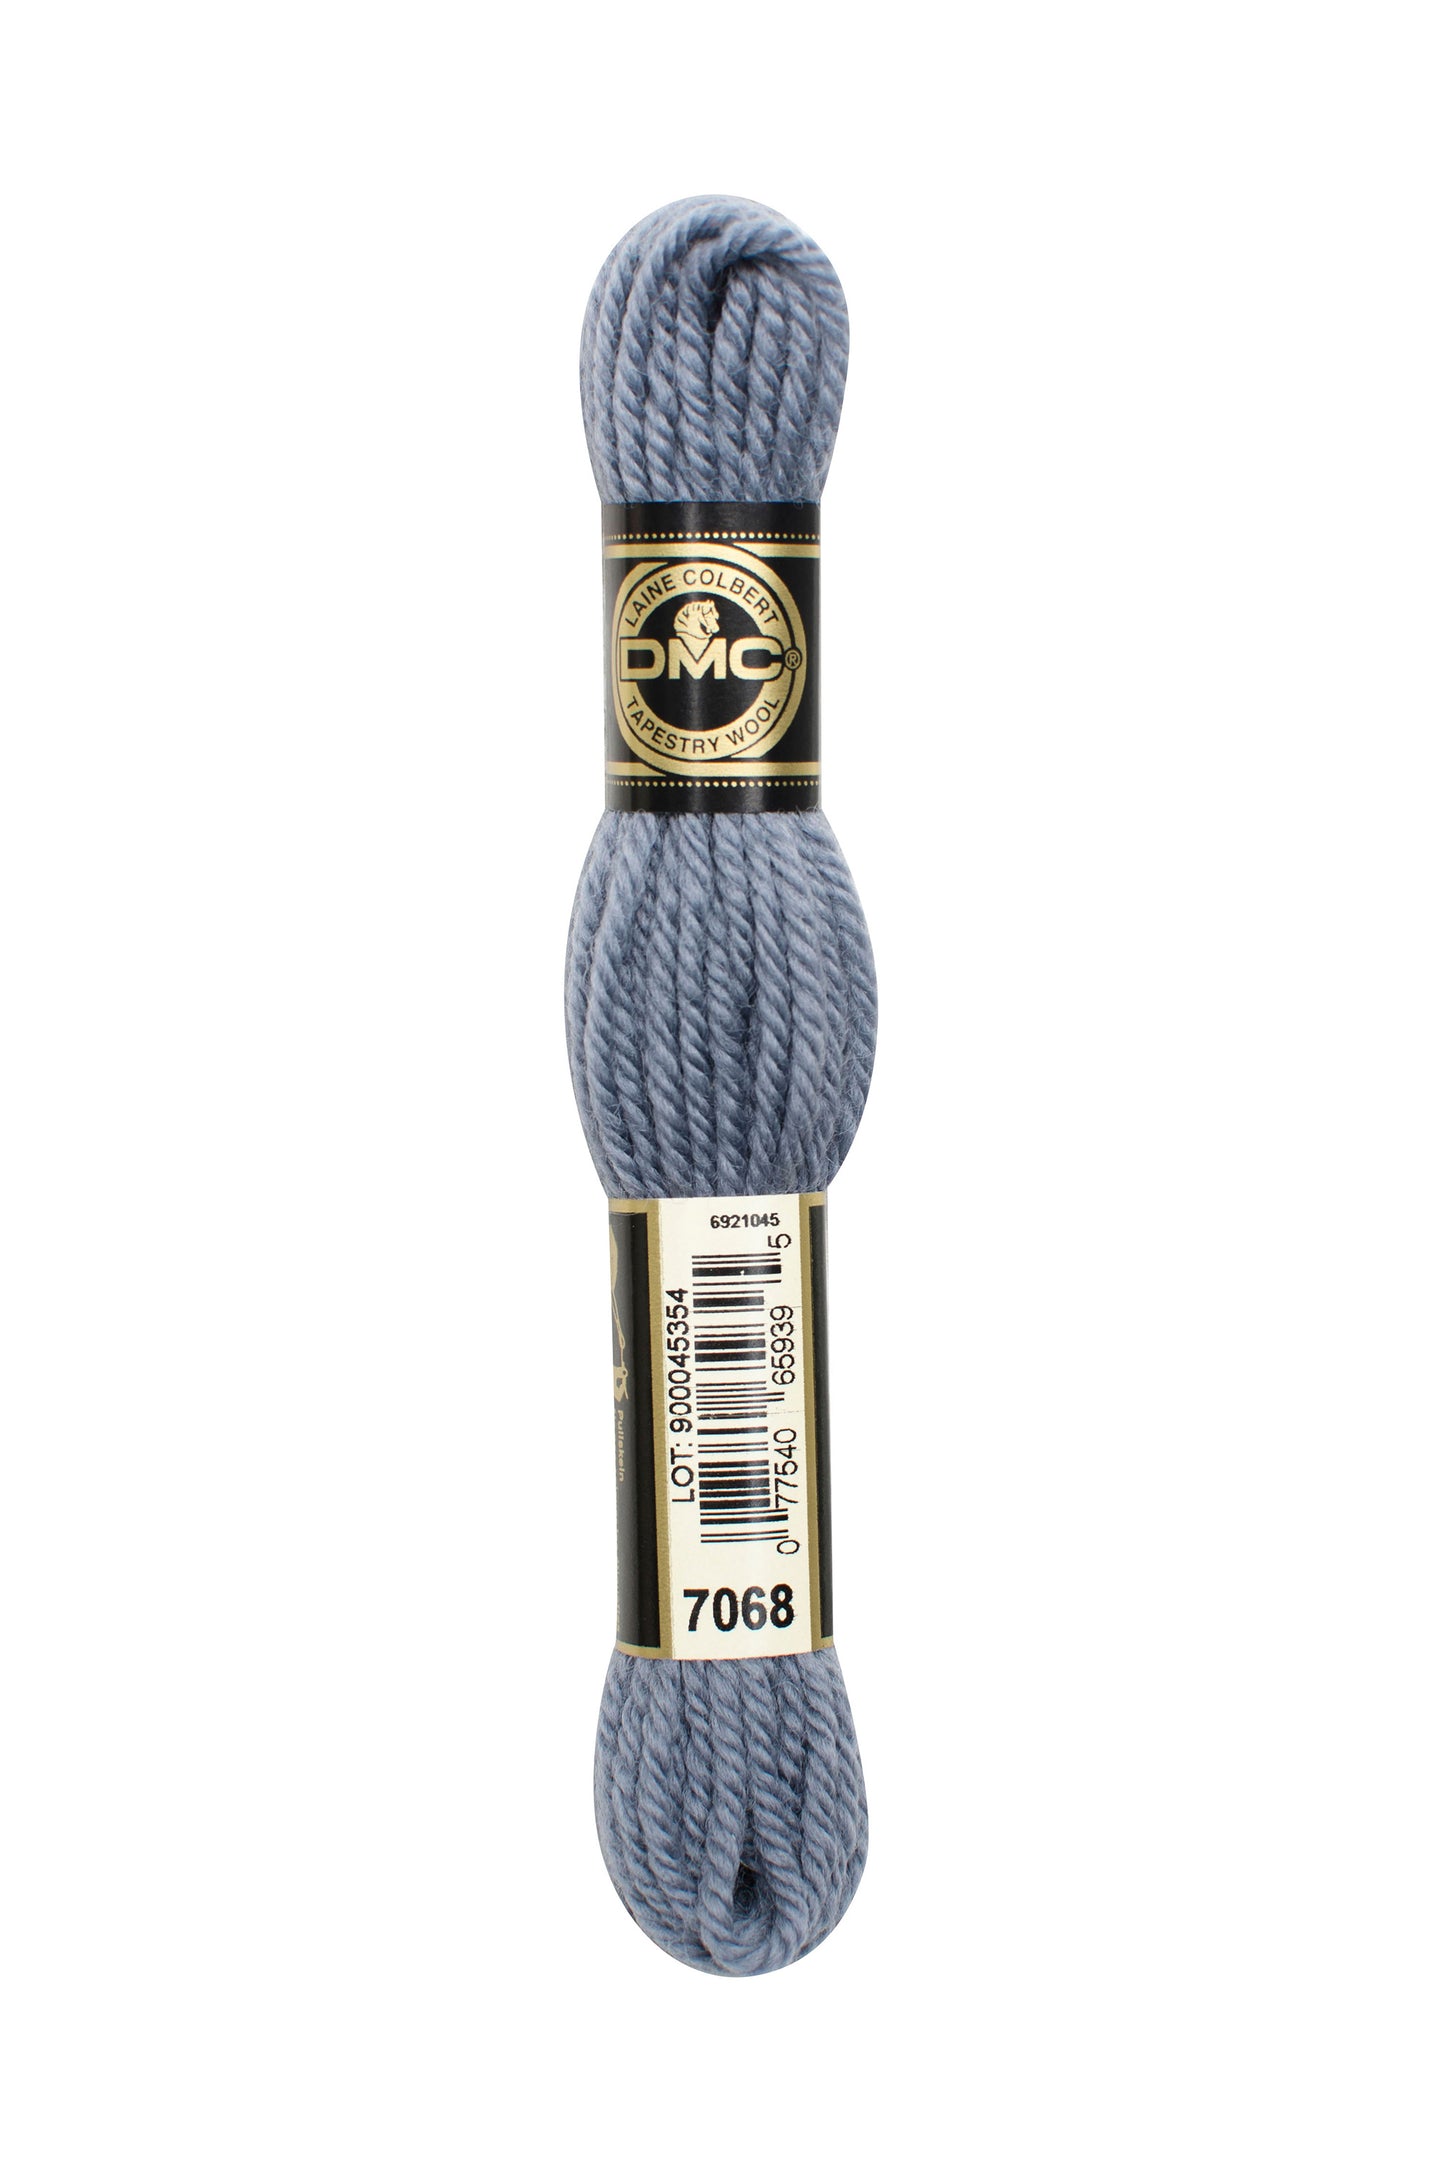 7068 – DMC Tapestry Wool